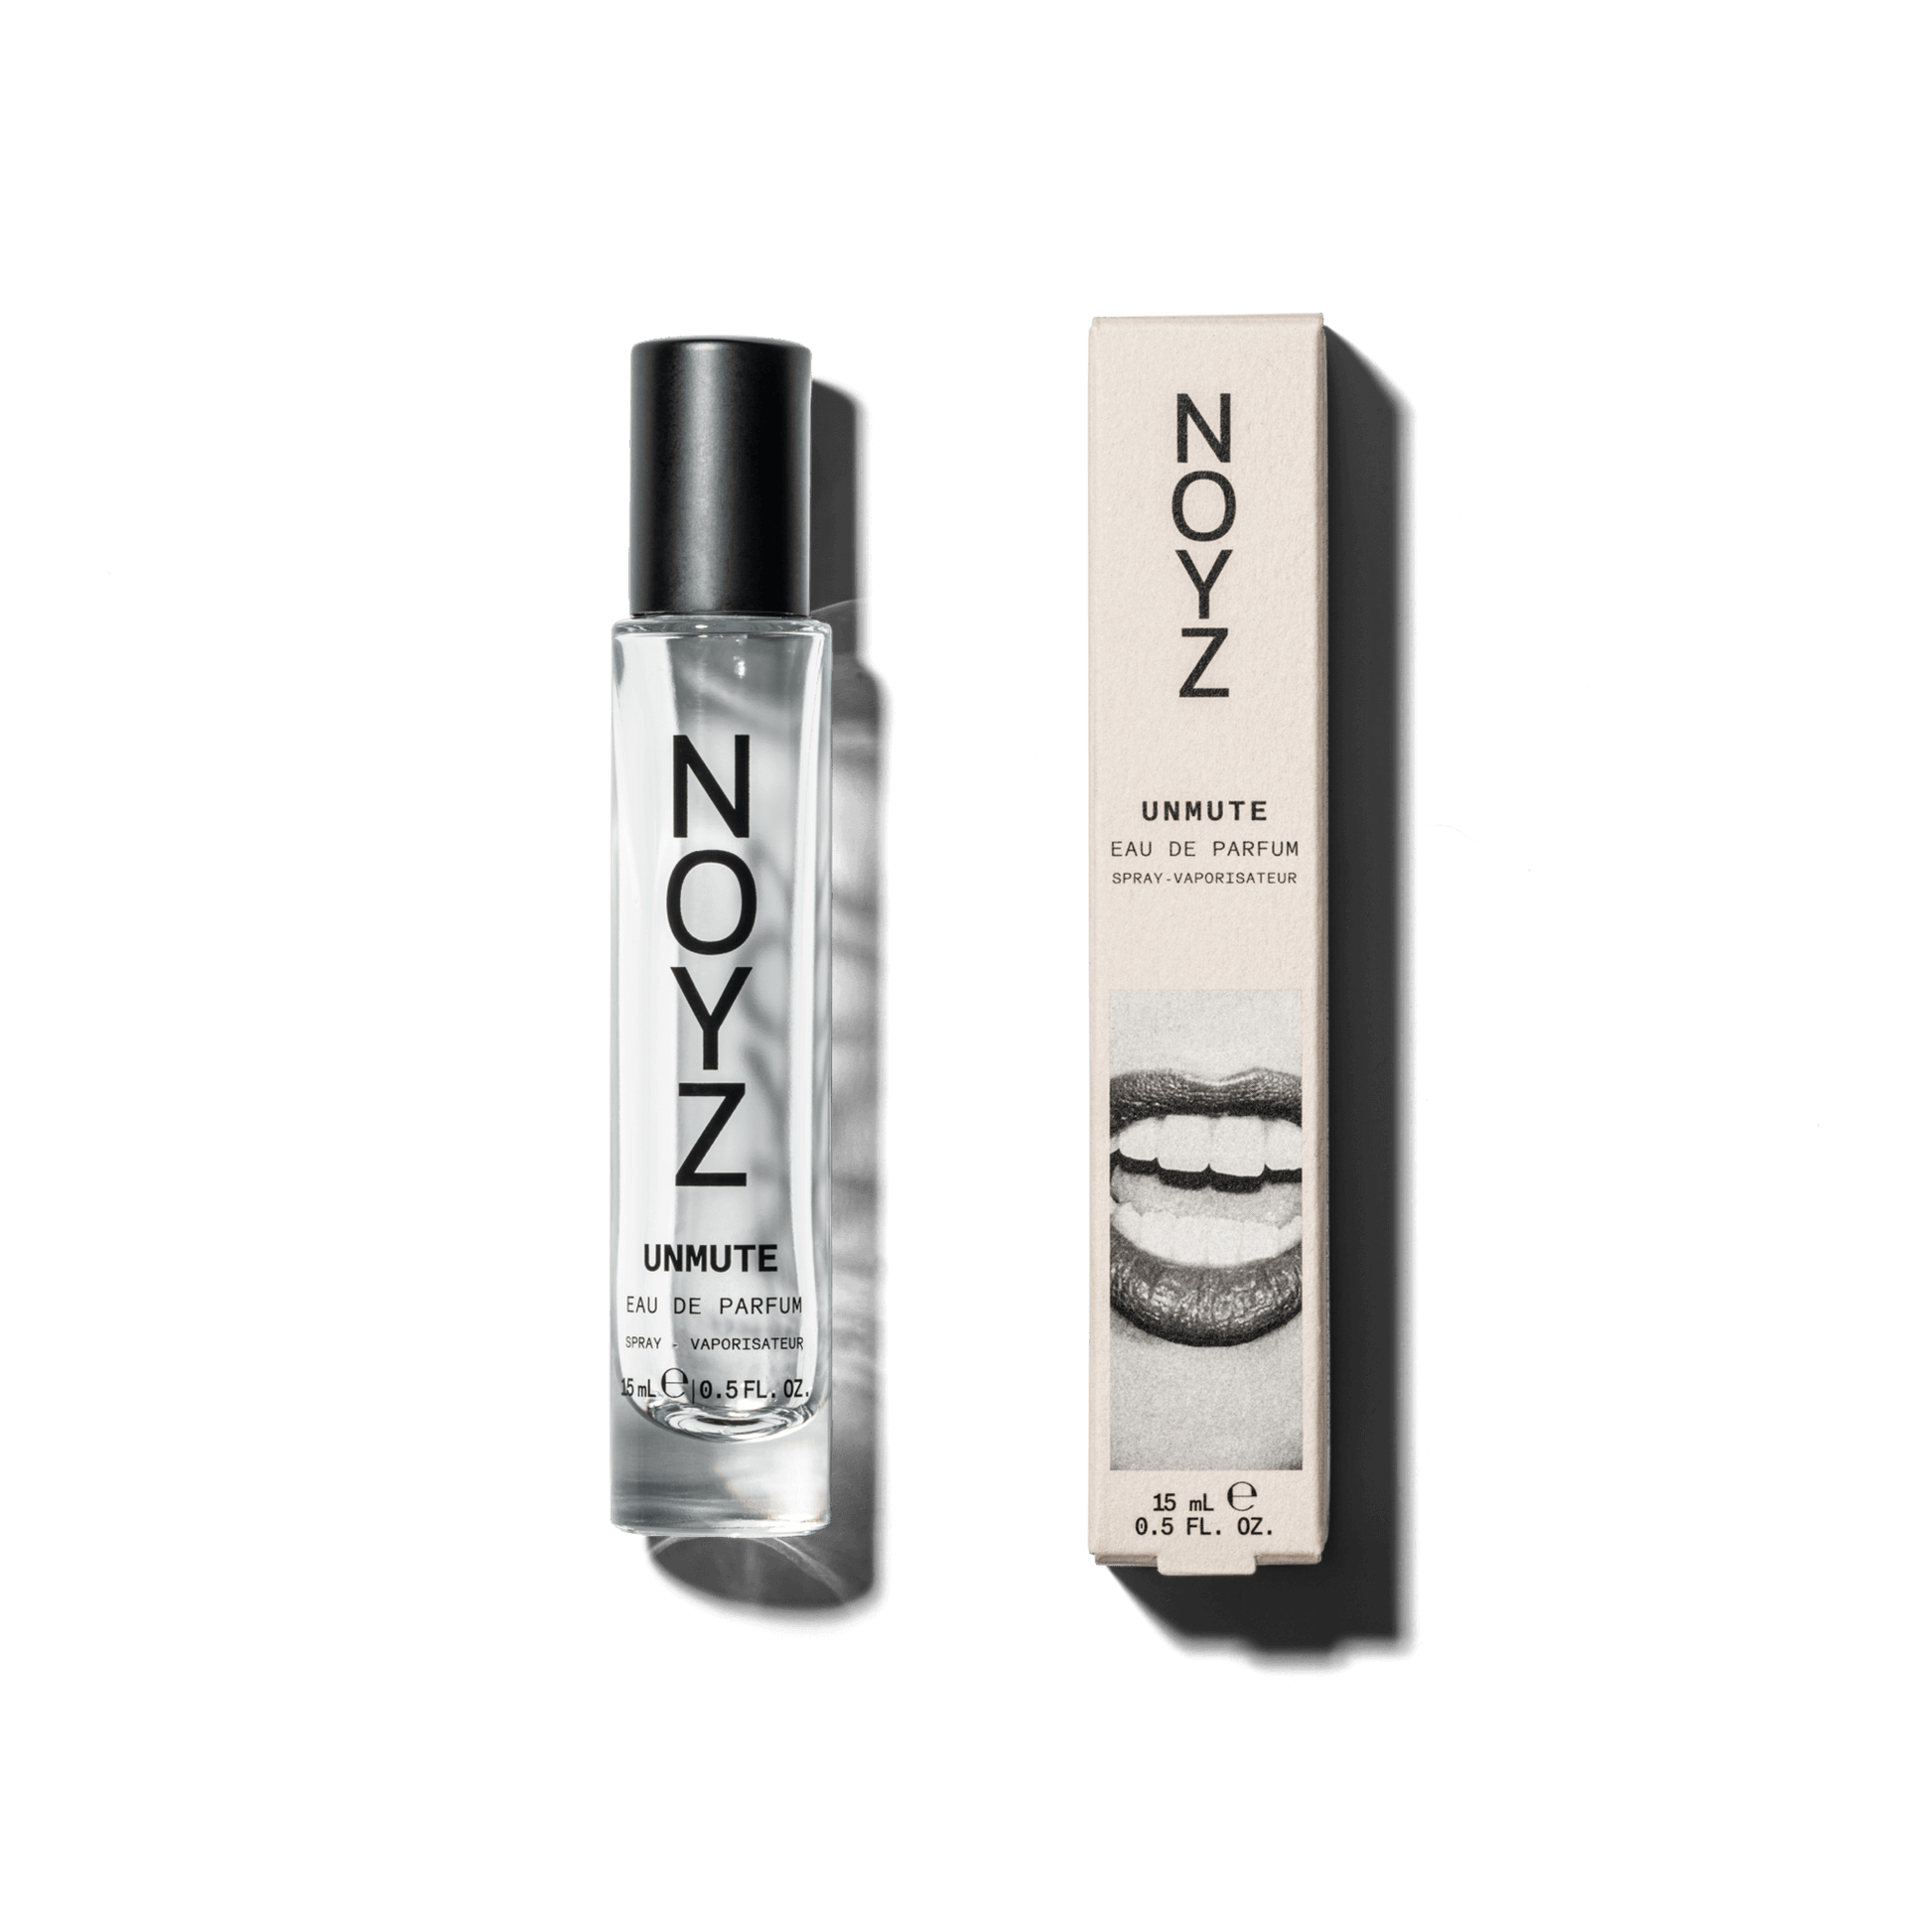 A small 15 ml glass bottle of Noyz Unmute unisex perfume sits alongside its packaging box